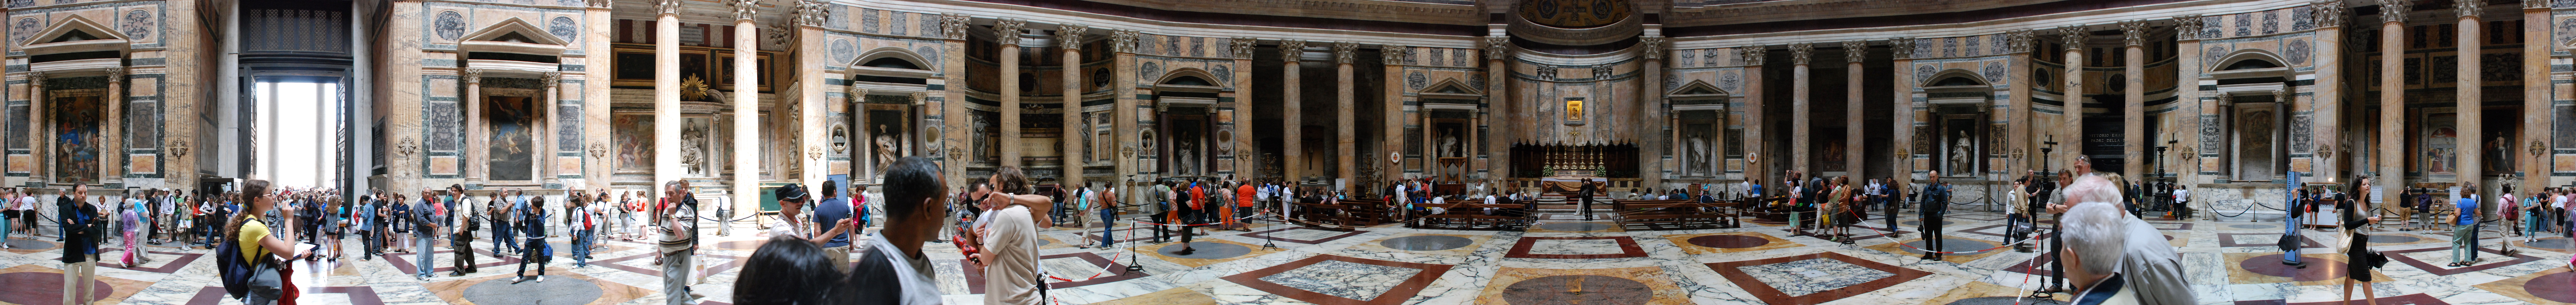 File Pantheon Interior 360 Degree Panorama Jpg Wikimedia